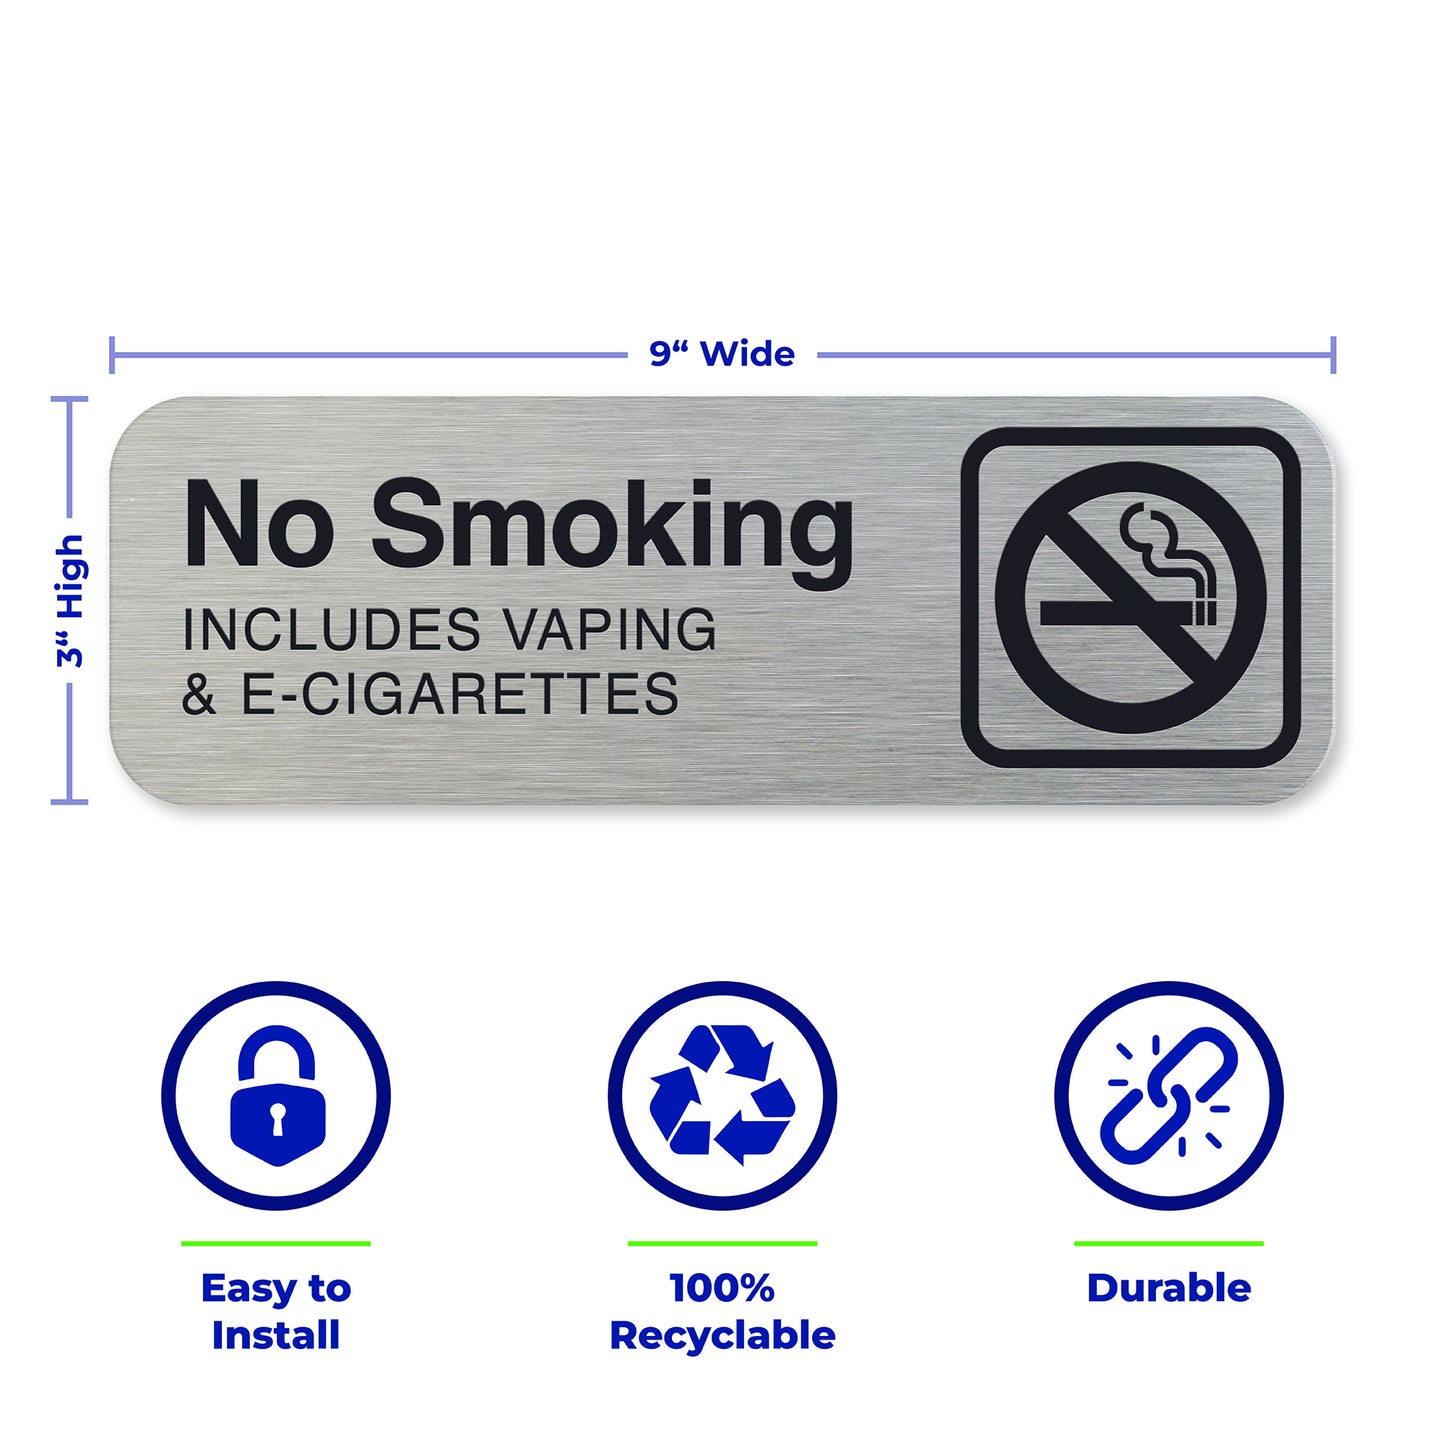 No Smoking Sign Office, NO SMOKING INCLUDING VAPING & E-CIGARETTES, Aluminum Brushed Silver, Black Text, 9"x 3"